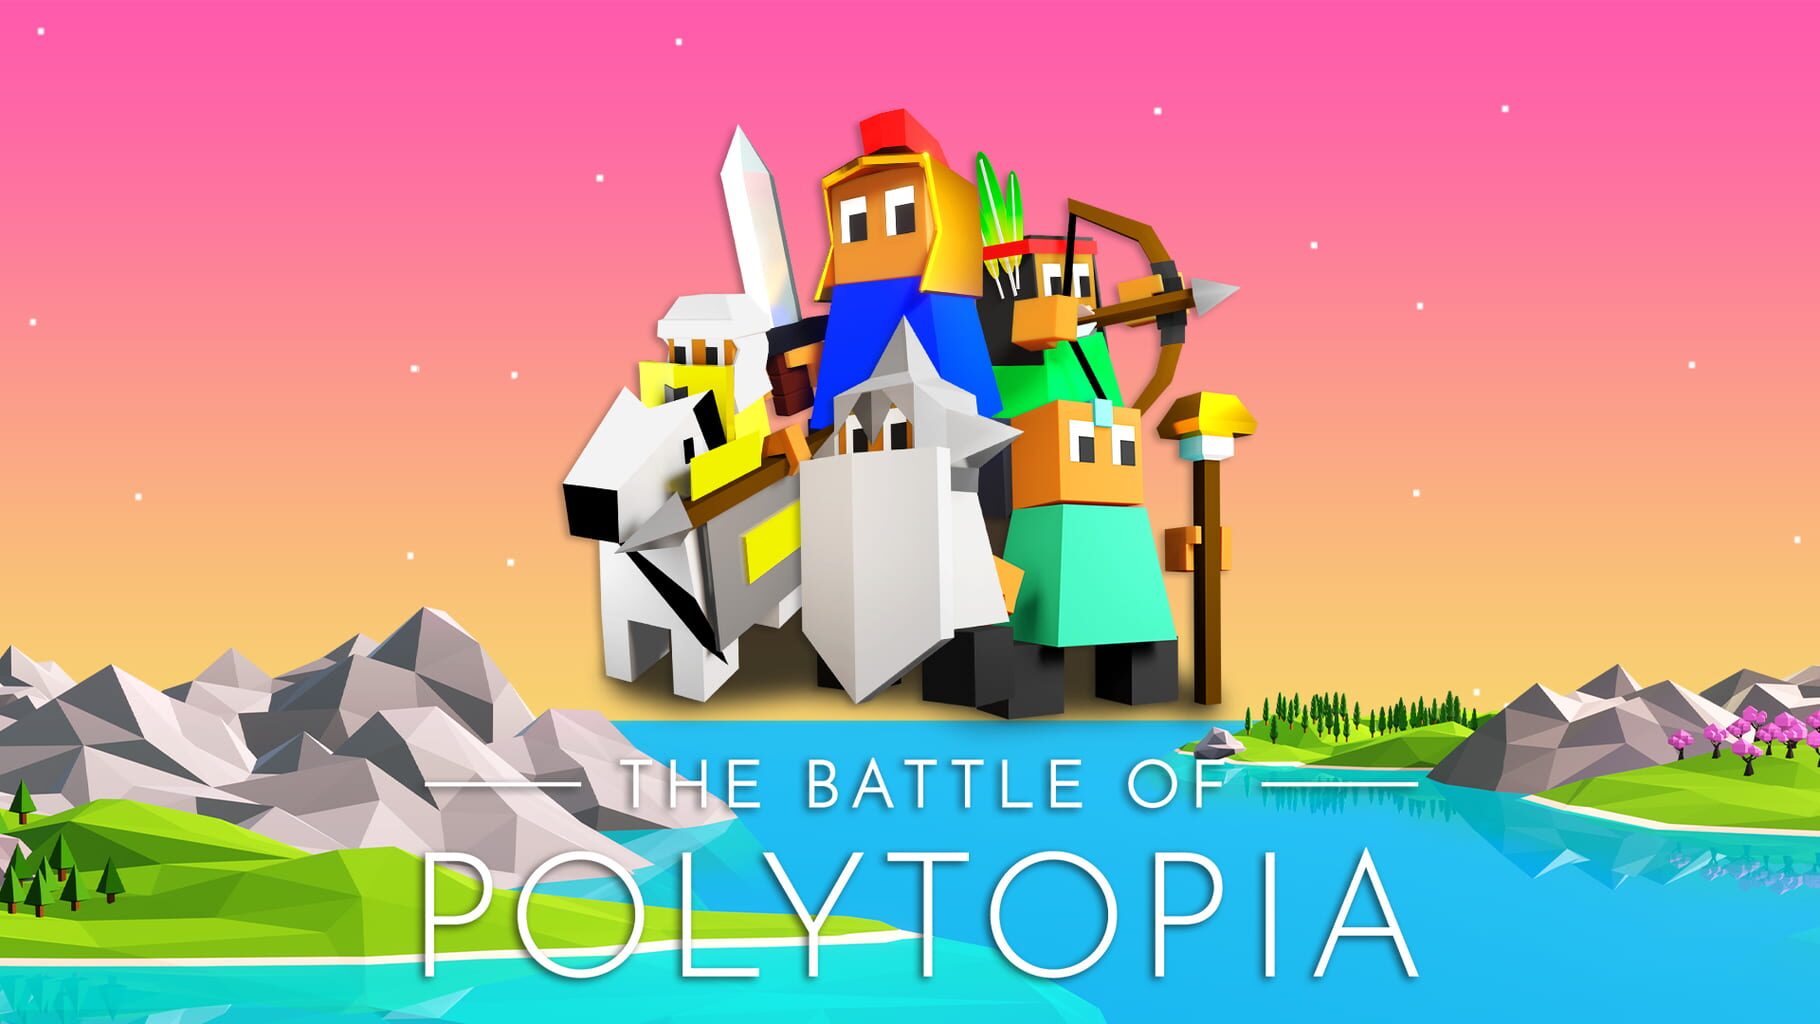 The Battle of Polytopia artwork